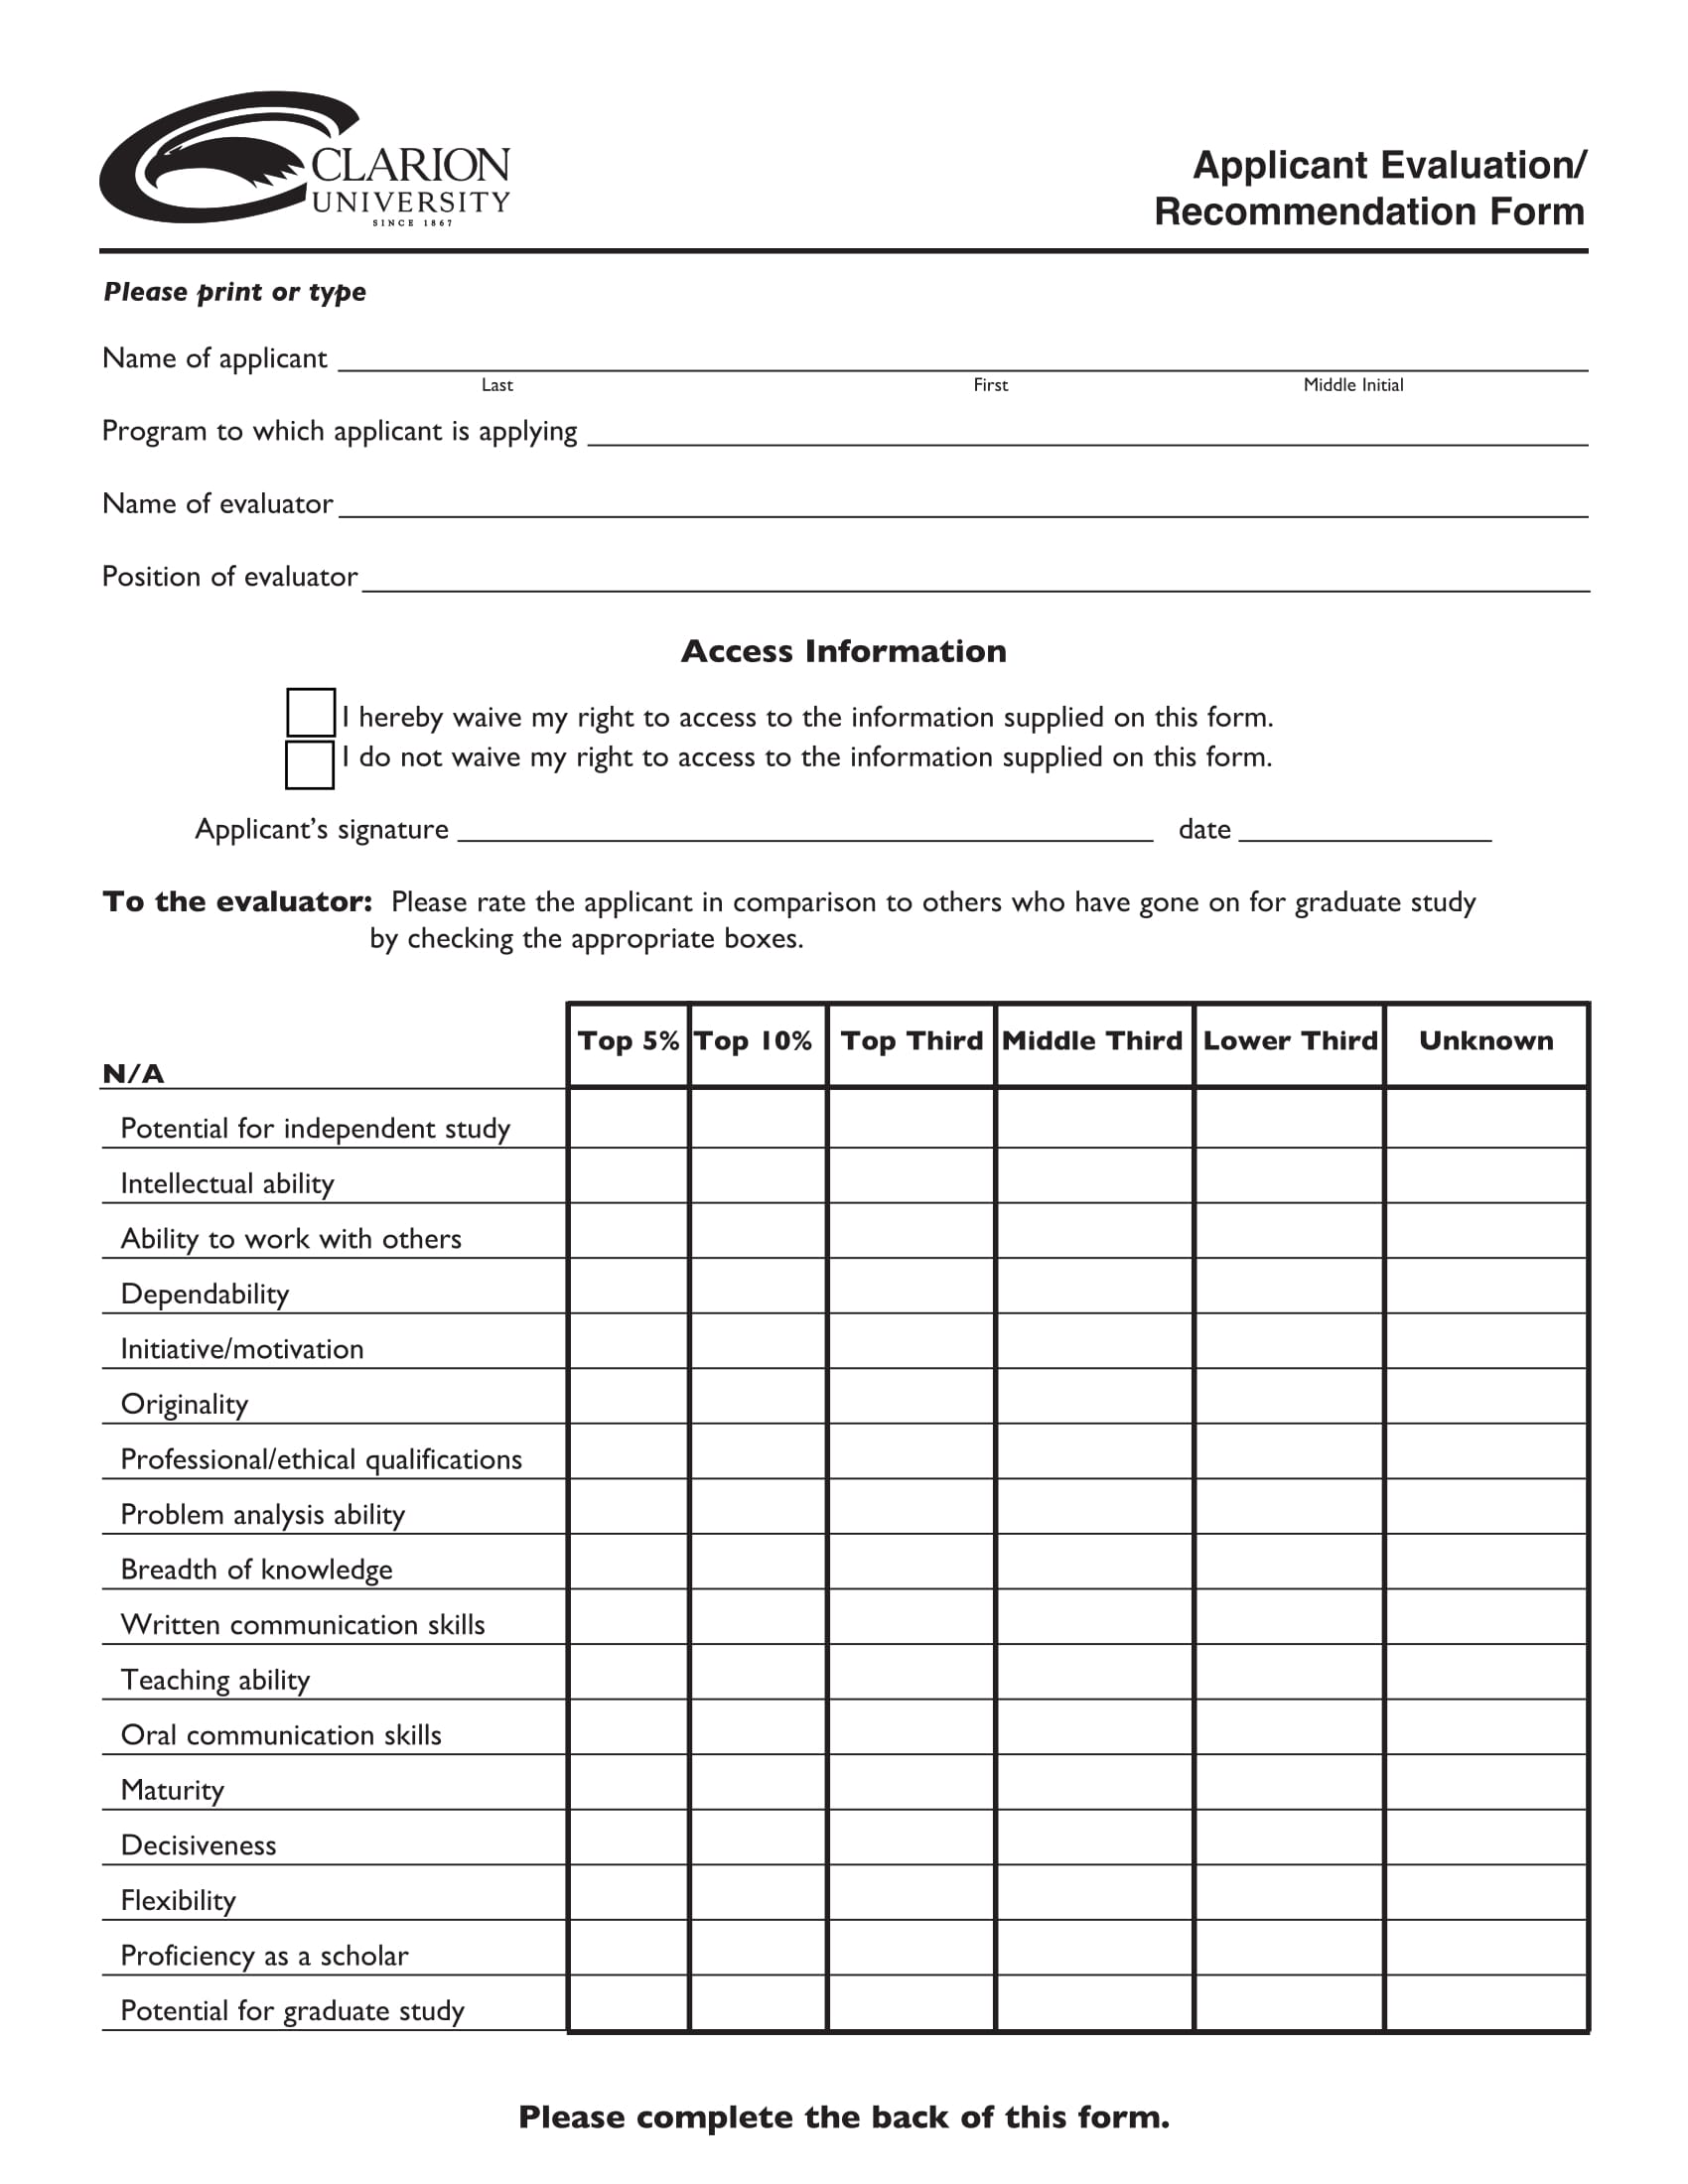 applicant evaluation recommendation form 1